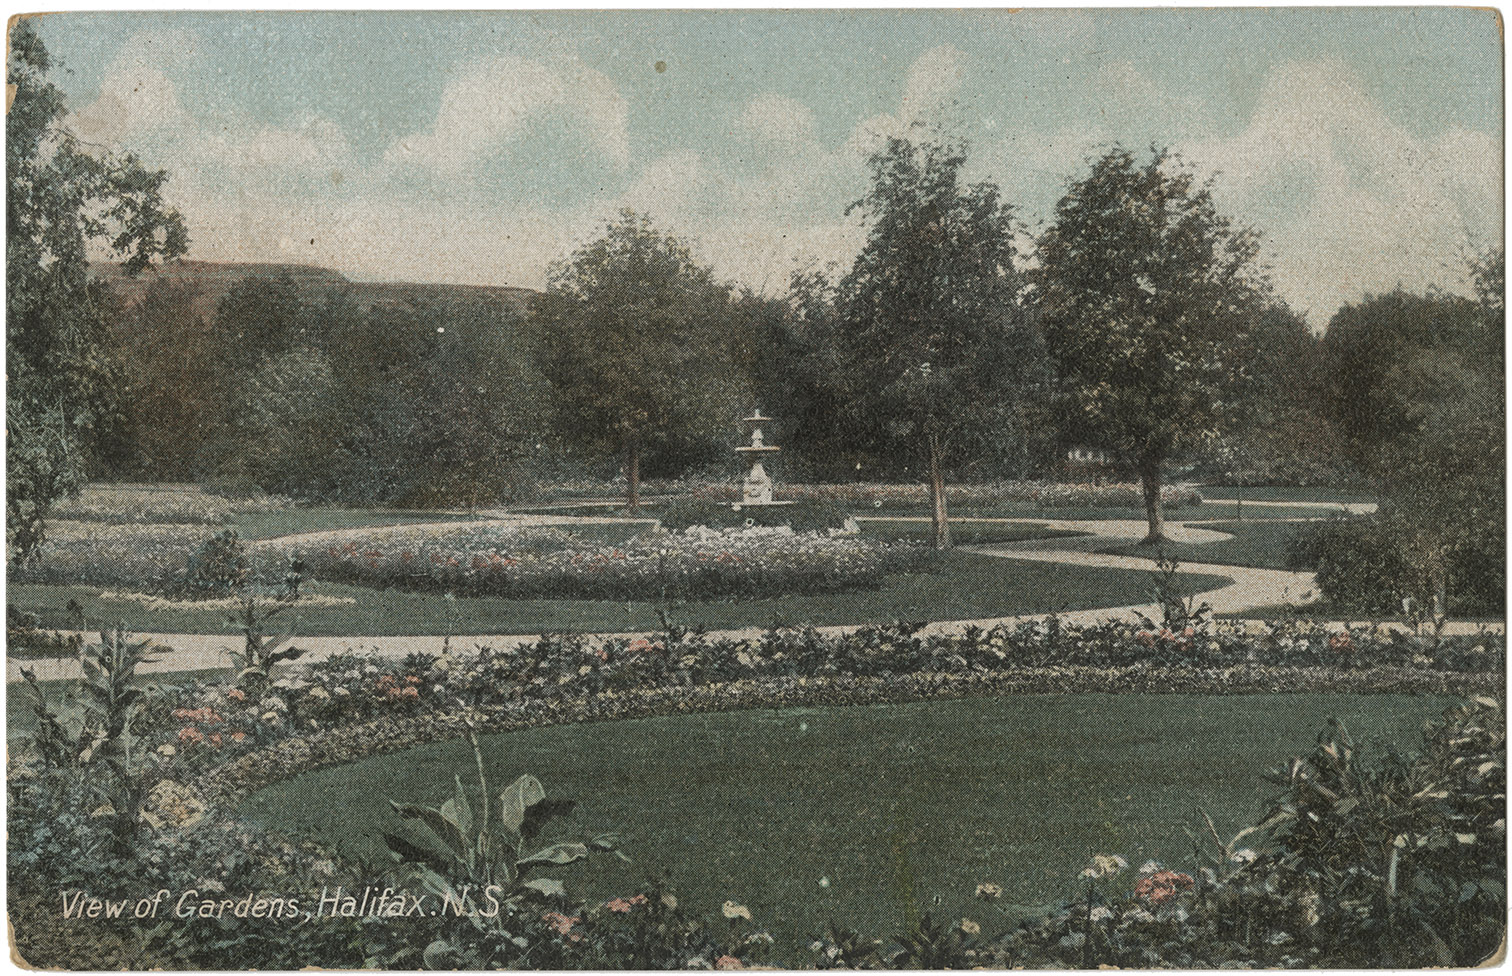 communityalbums - View of Gardens, Halifax, N.S.